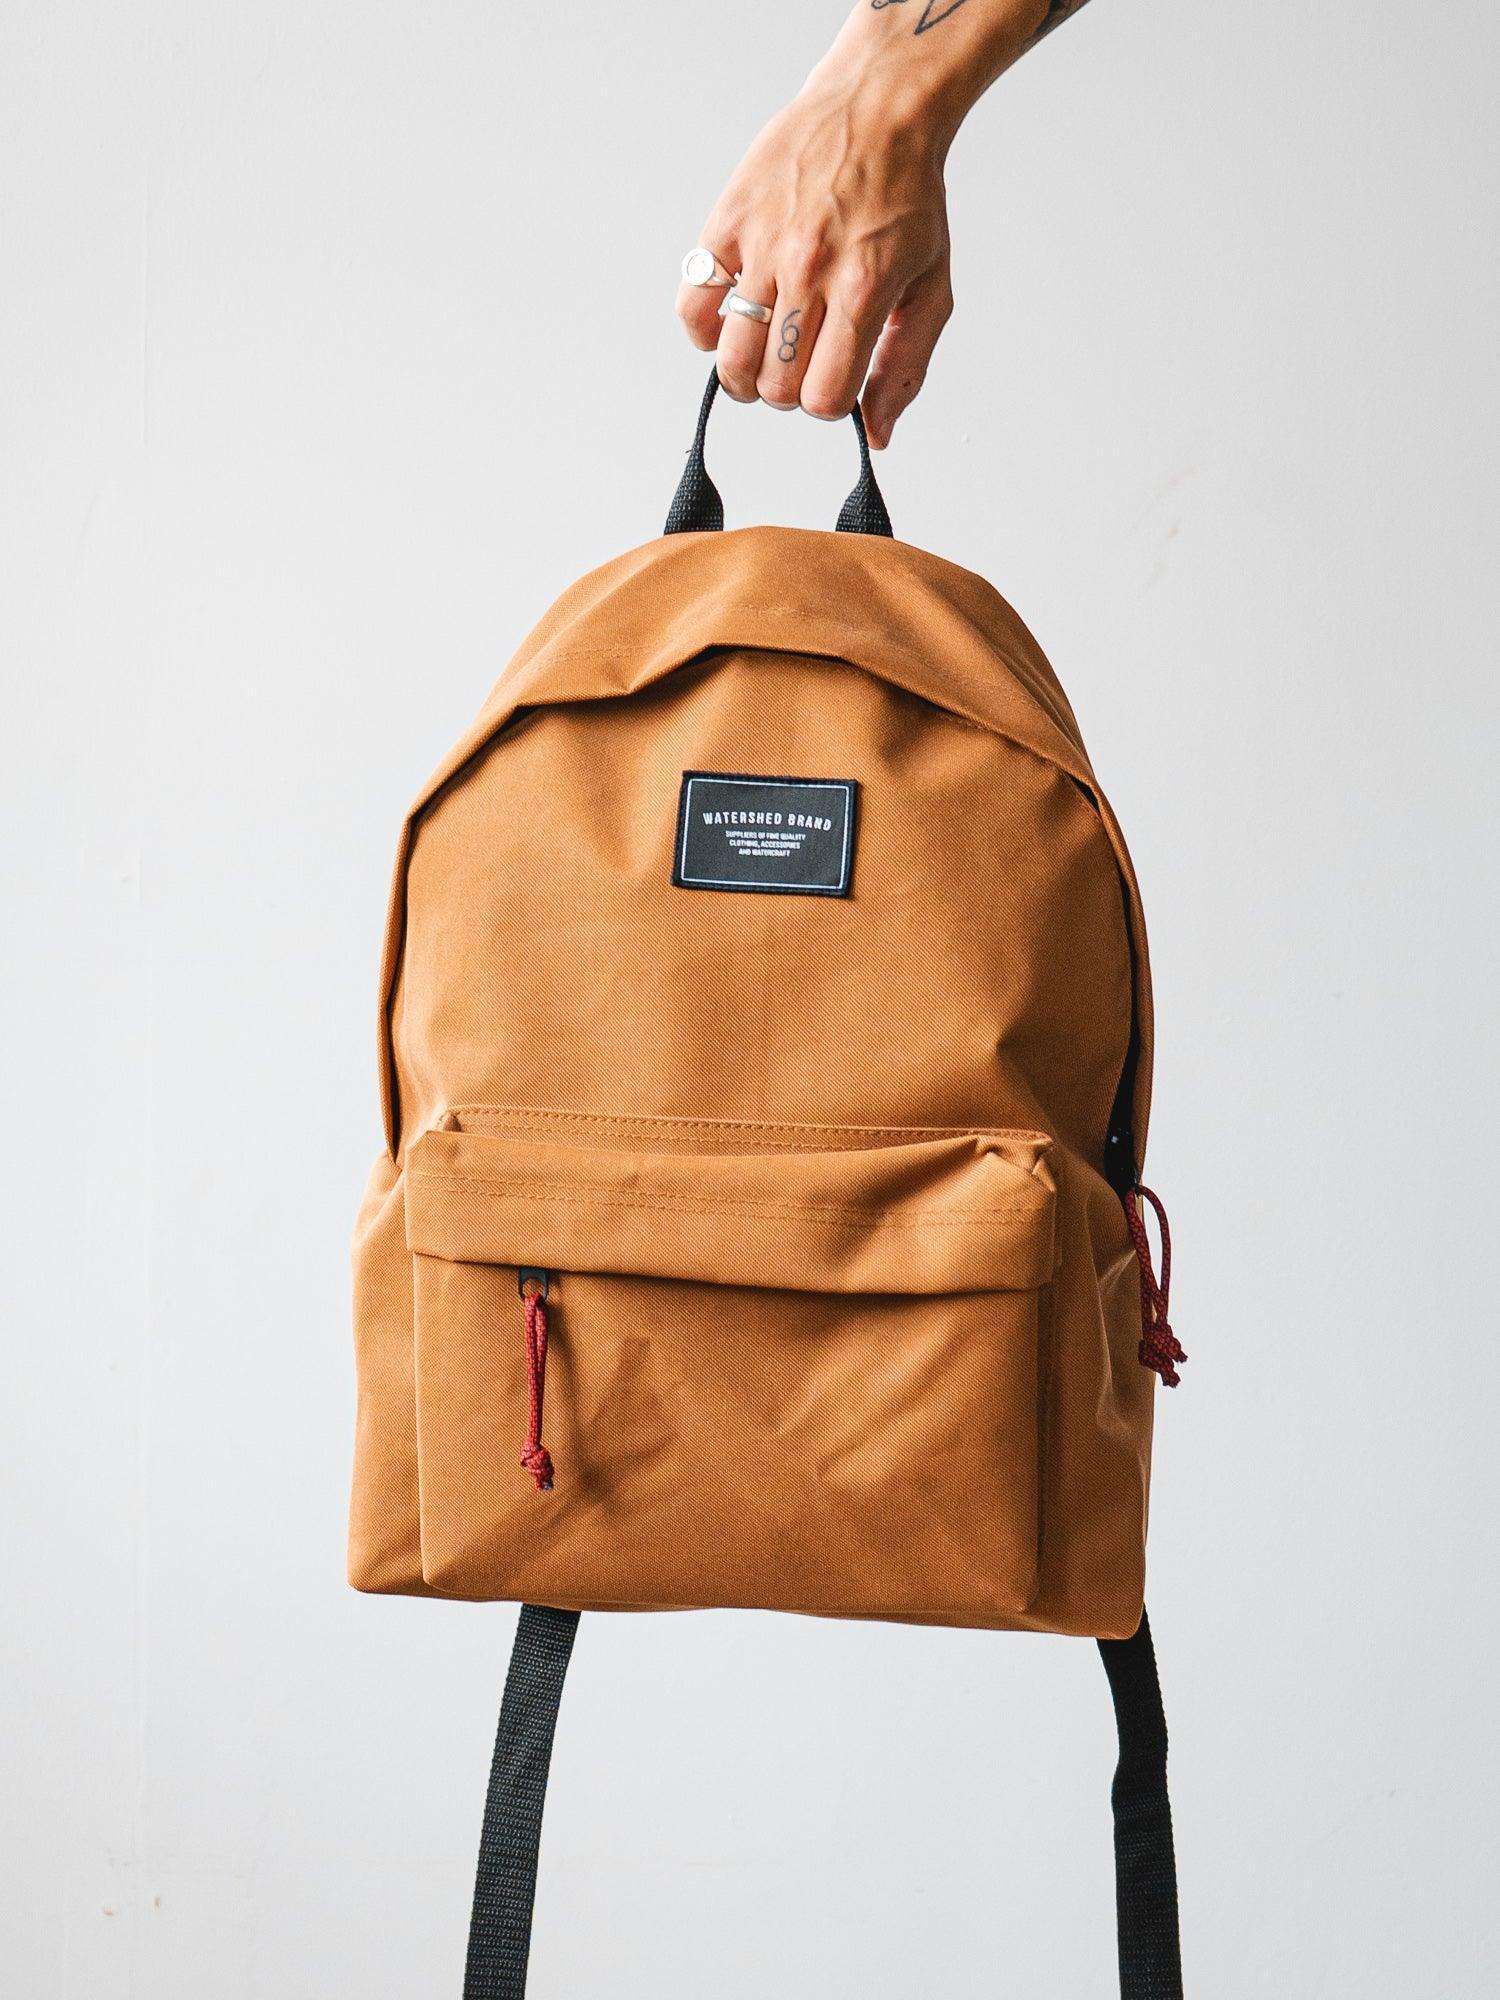 School backpack - caramel backpack - union backpack 